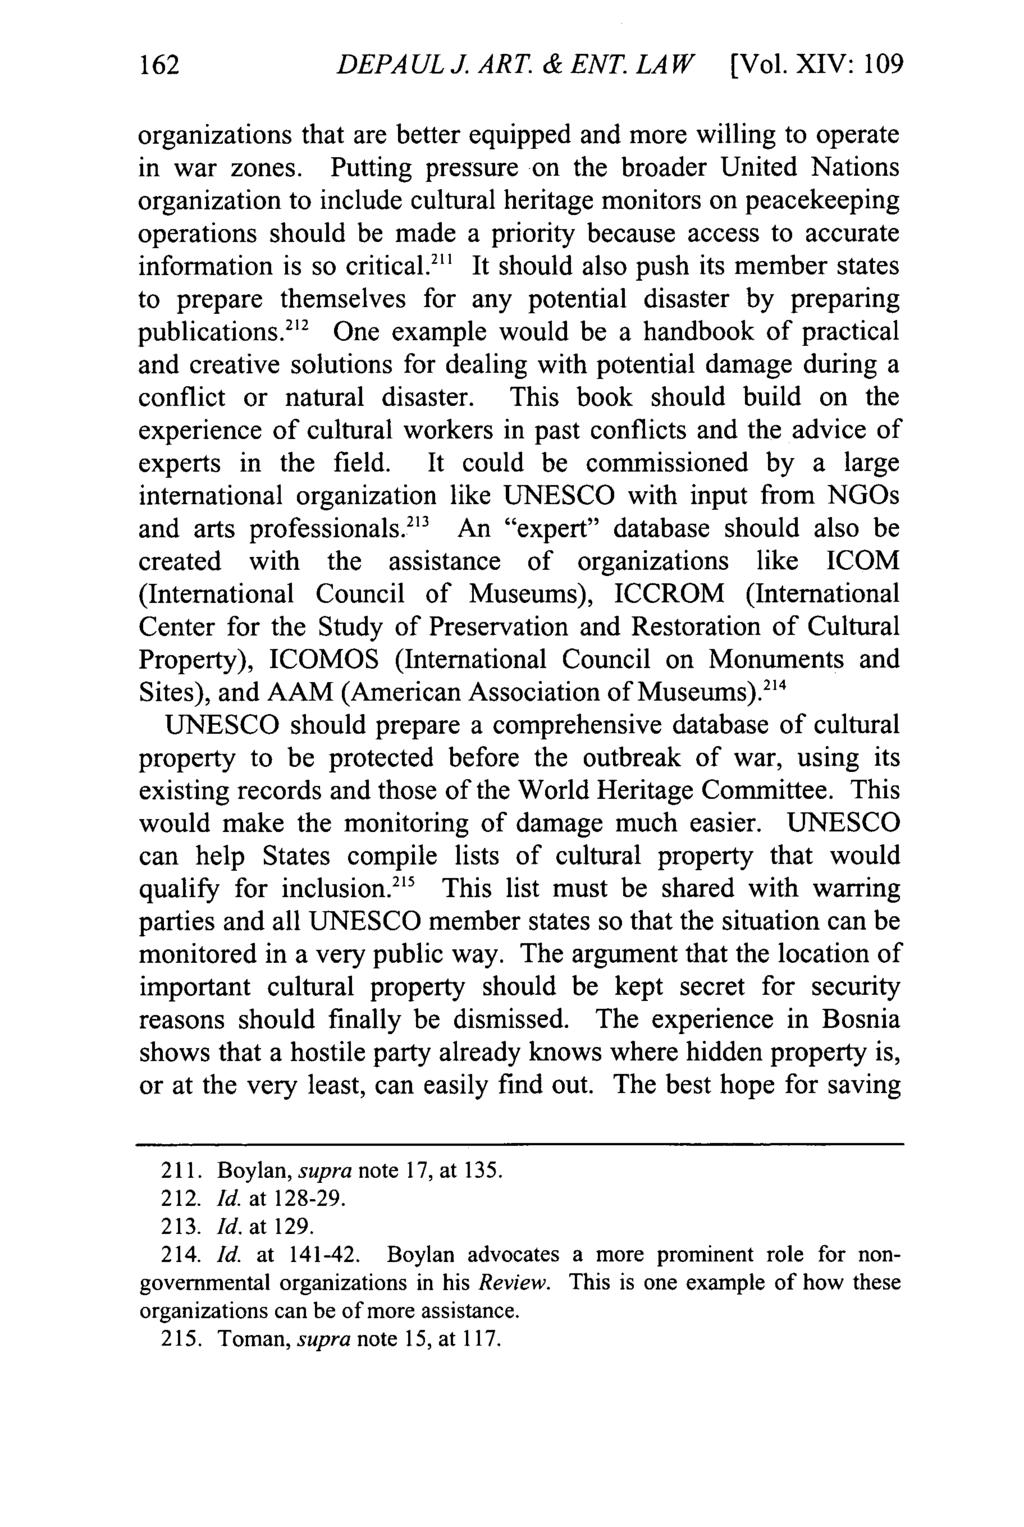 DePaul Journal of Art, Technology DEPAULJ.ART. & Intellectual Property &ENT.LAW Law, Vol. 14, Iss. [Vol.XIV: 1 [2016], Art.